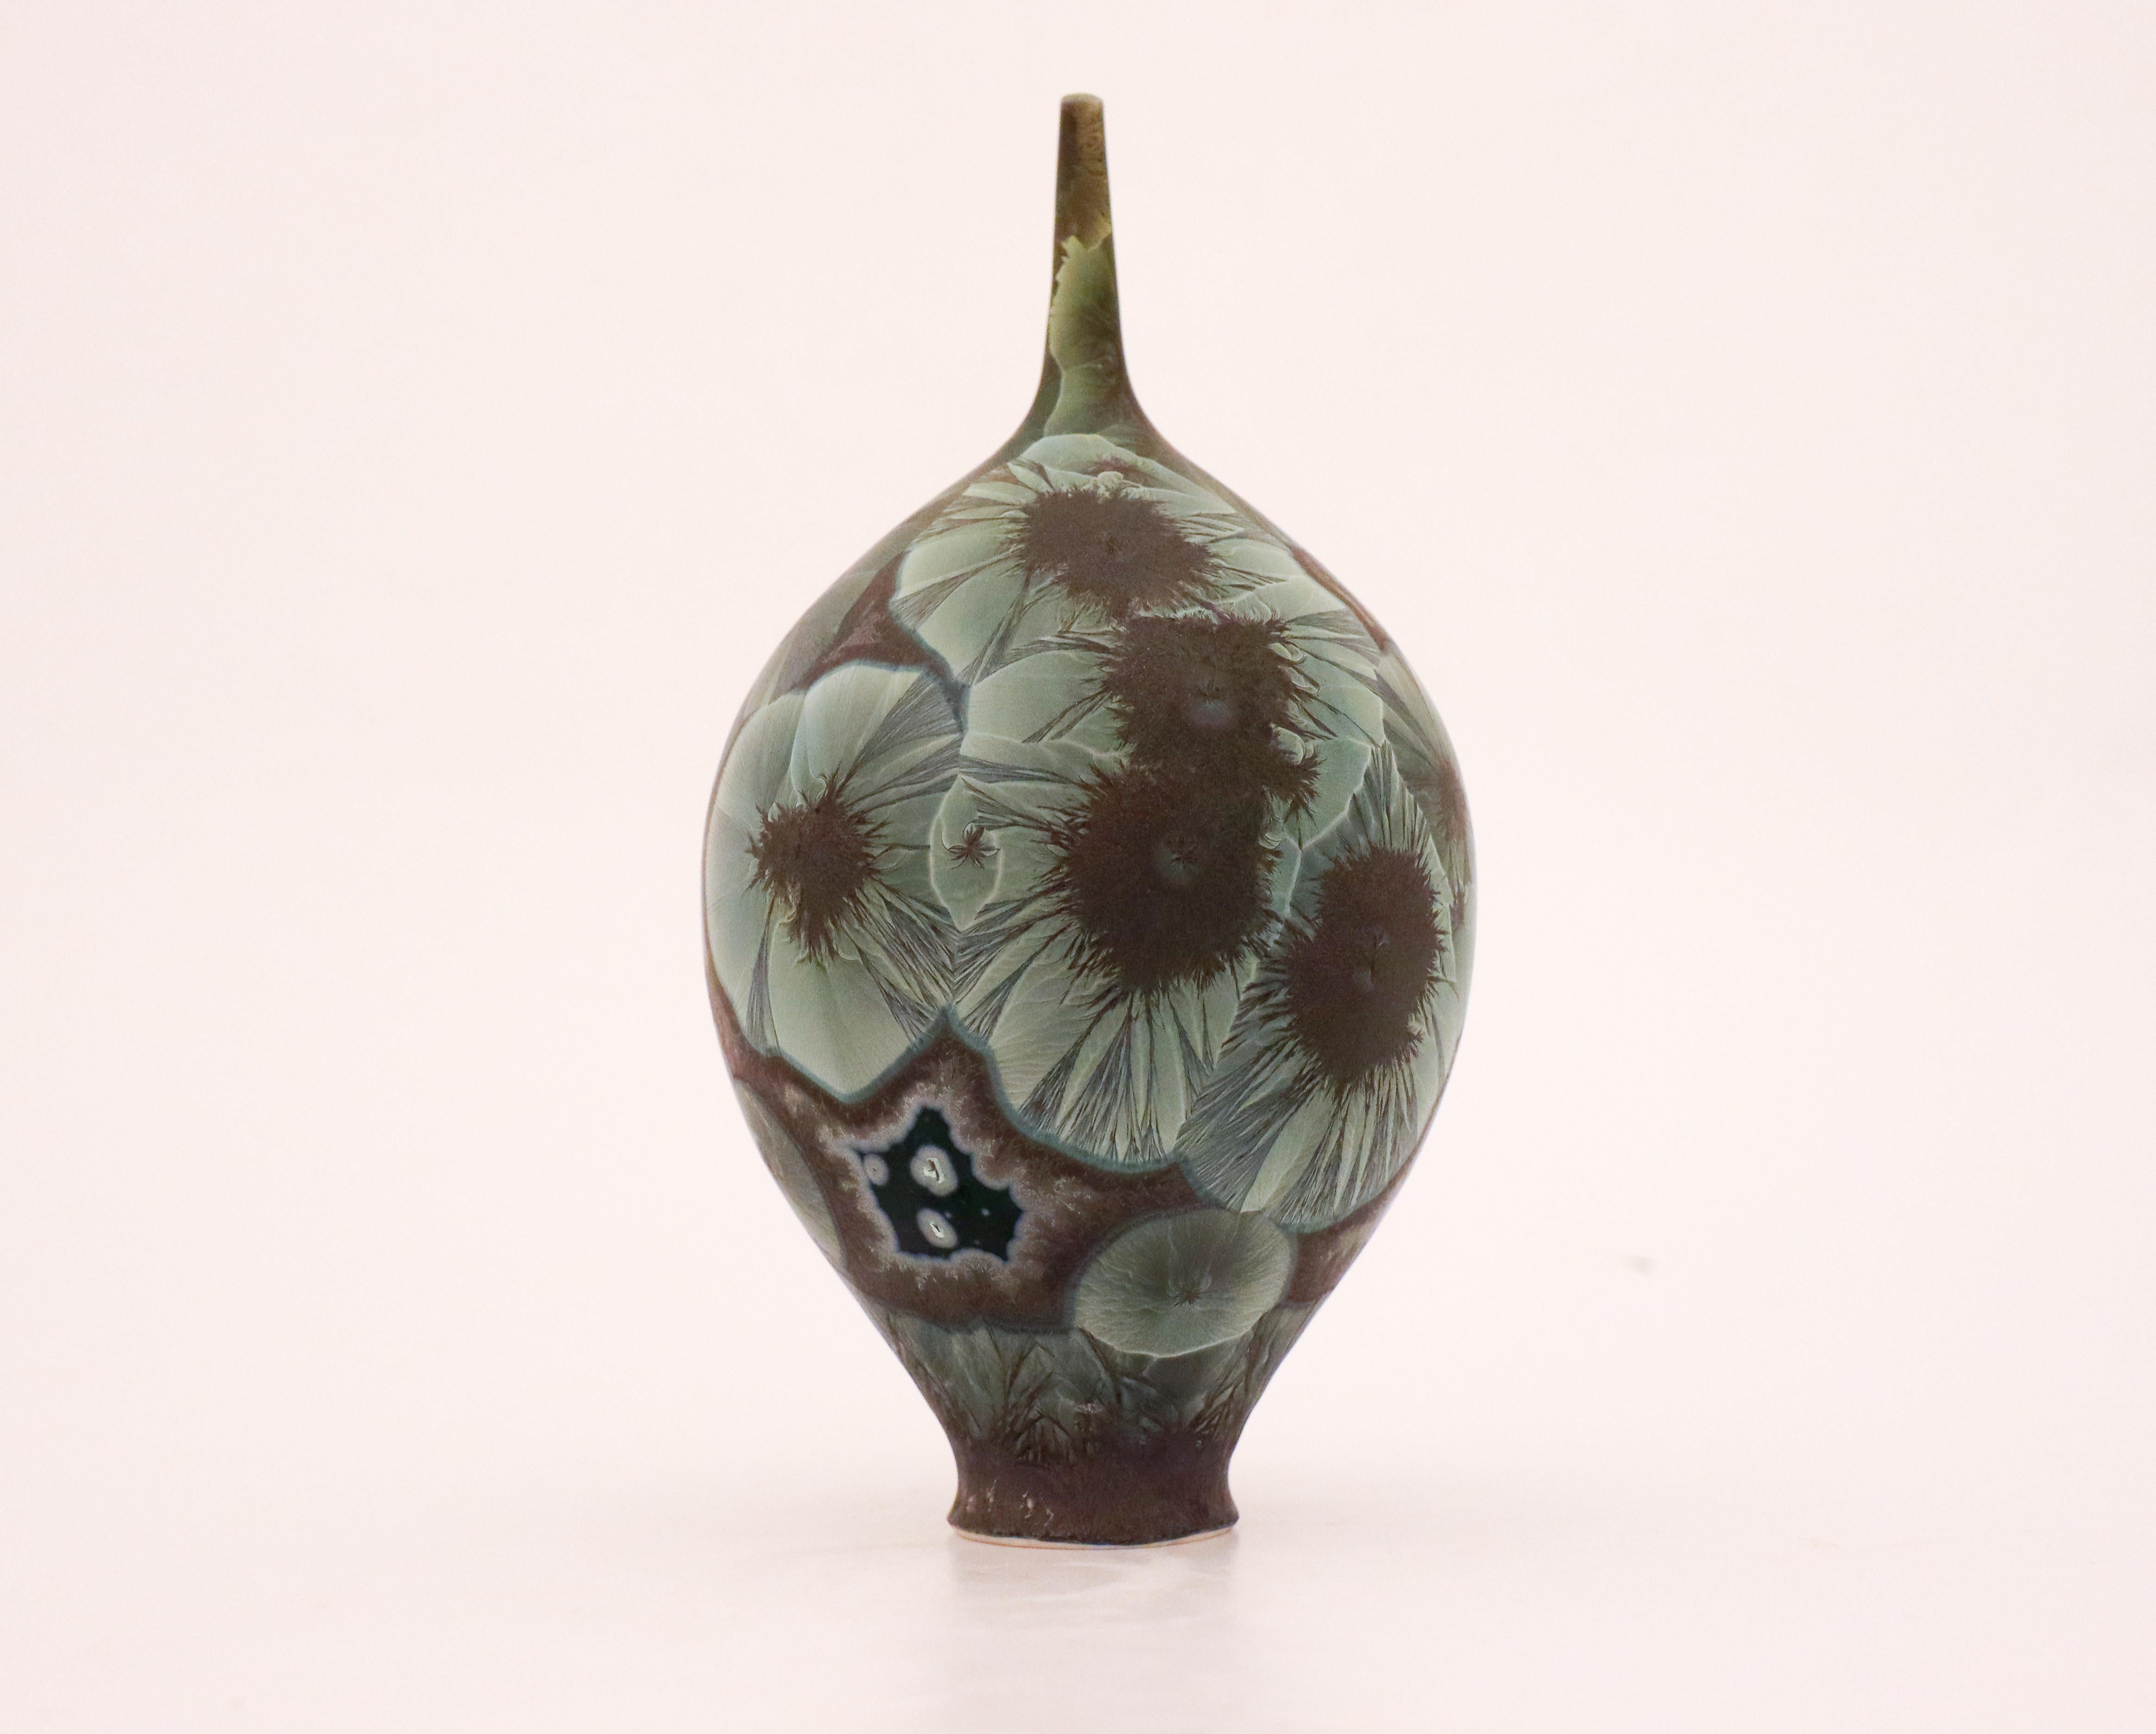 Scandinavian Modern Isak Isaksson, Green Crystalline Glaze, Contemporary Swedish Ceramicist